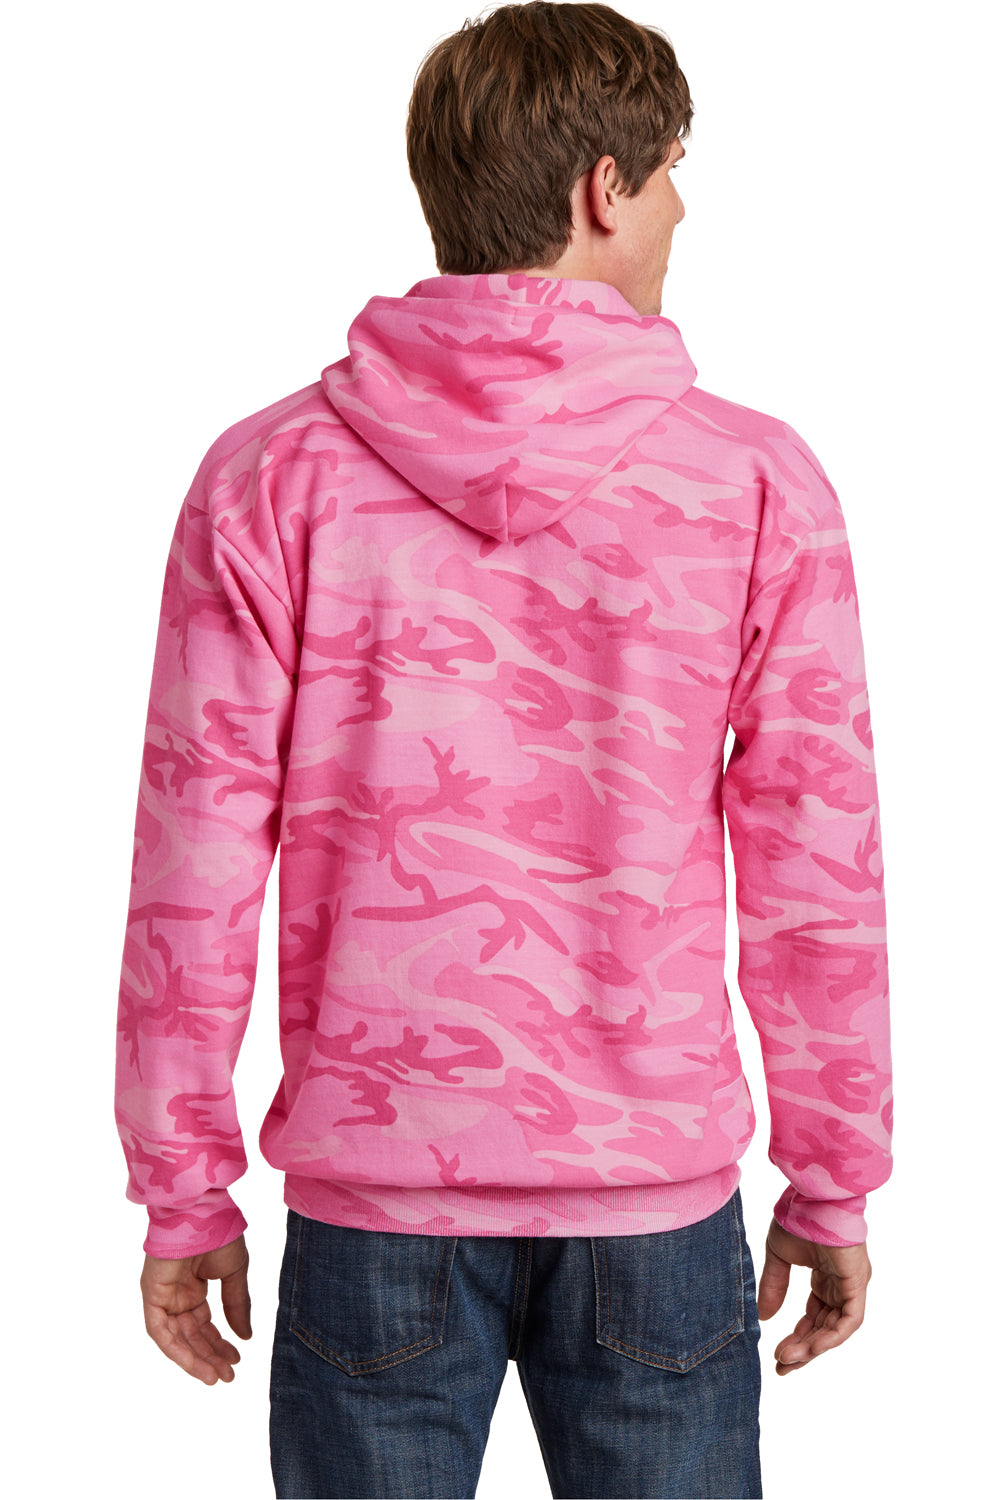 Port & Company PC78HC Mens Core Fleece Hooded Sweatshirt Hoodie Pink Camo Back